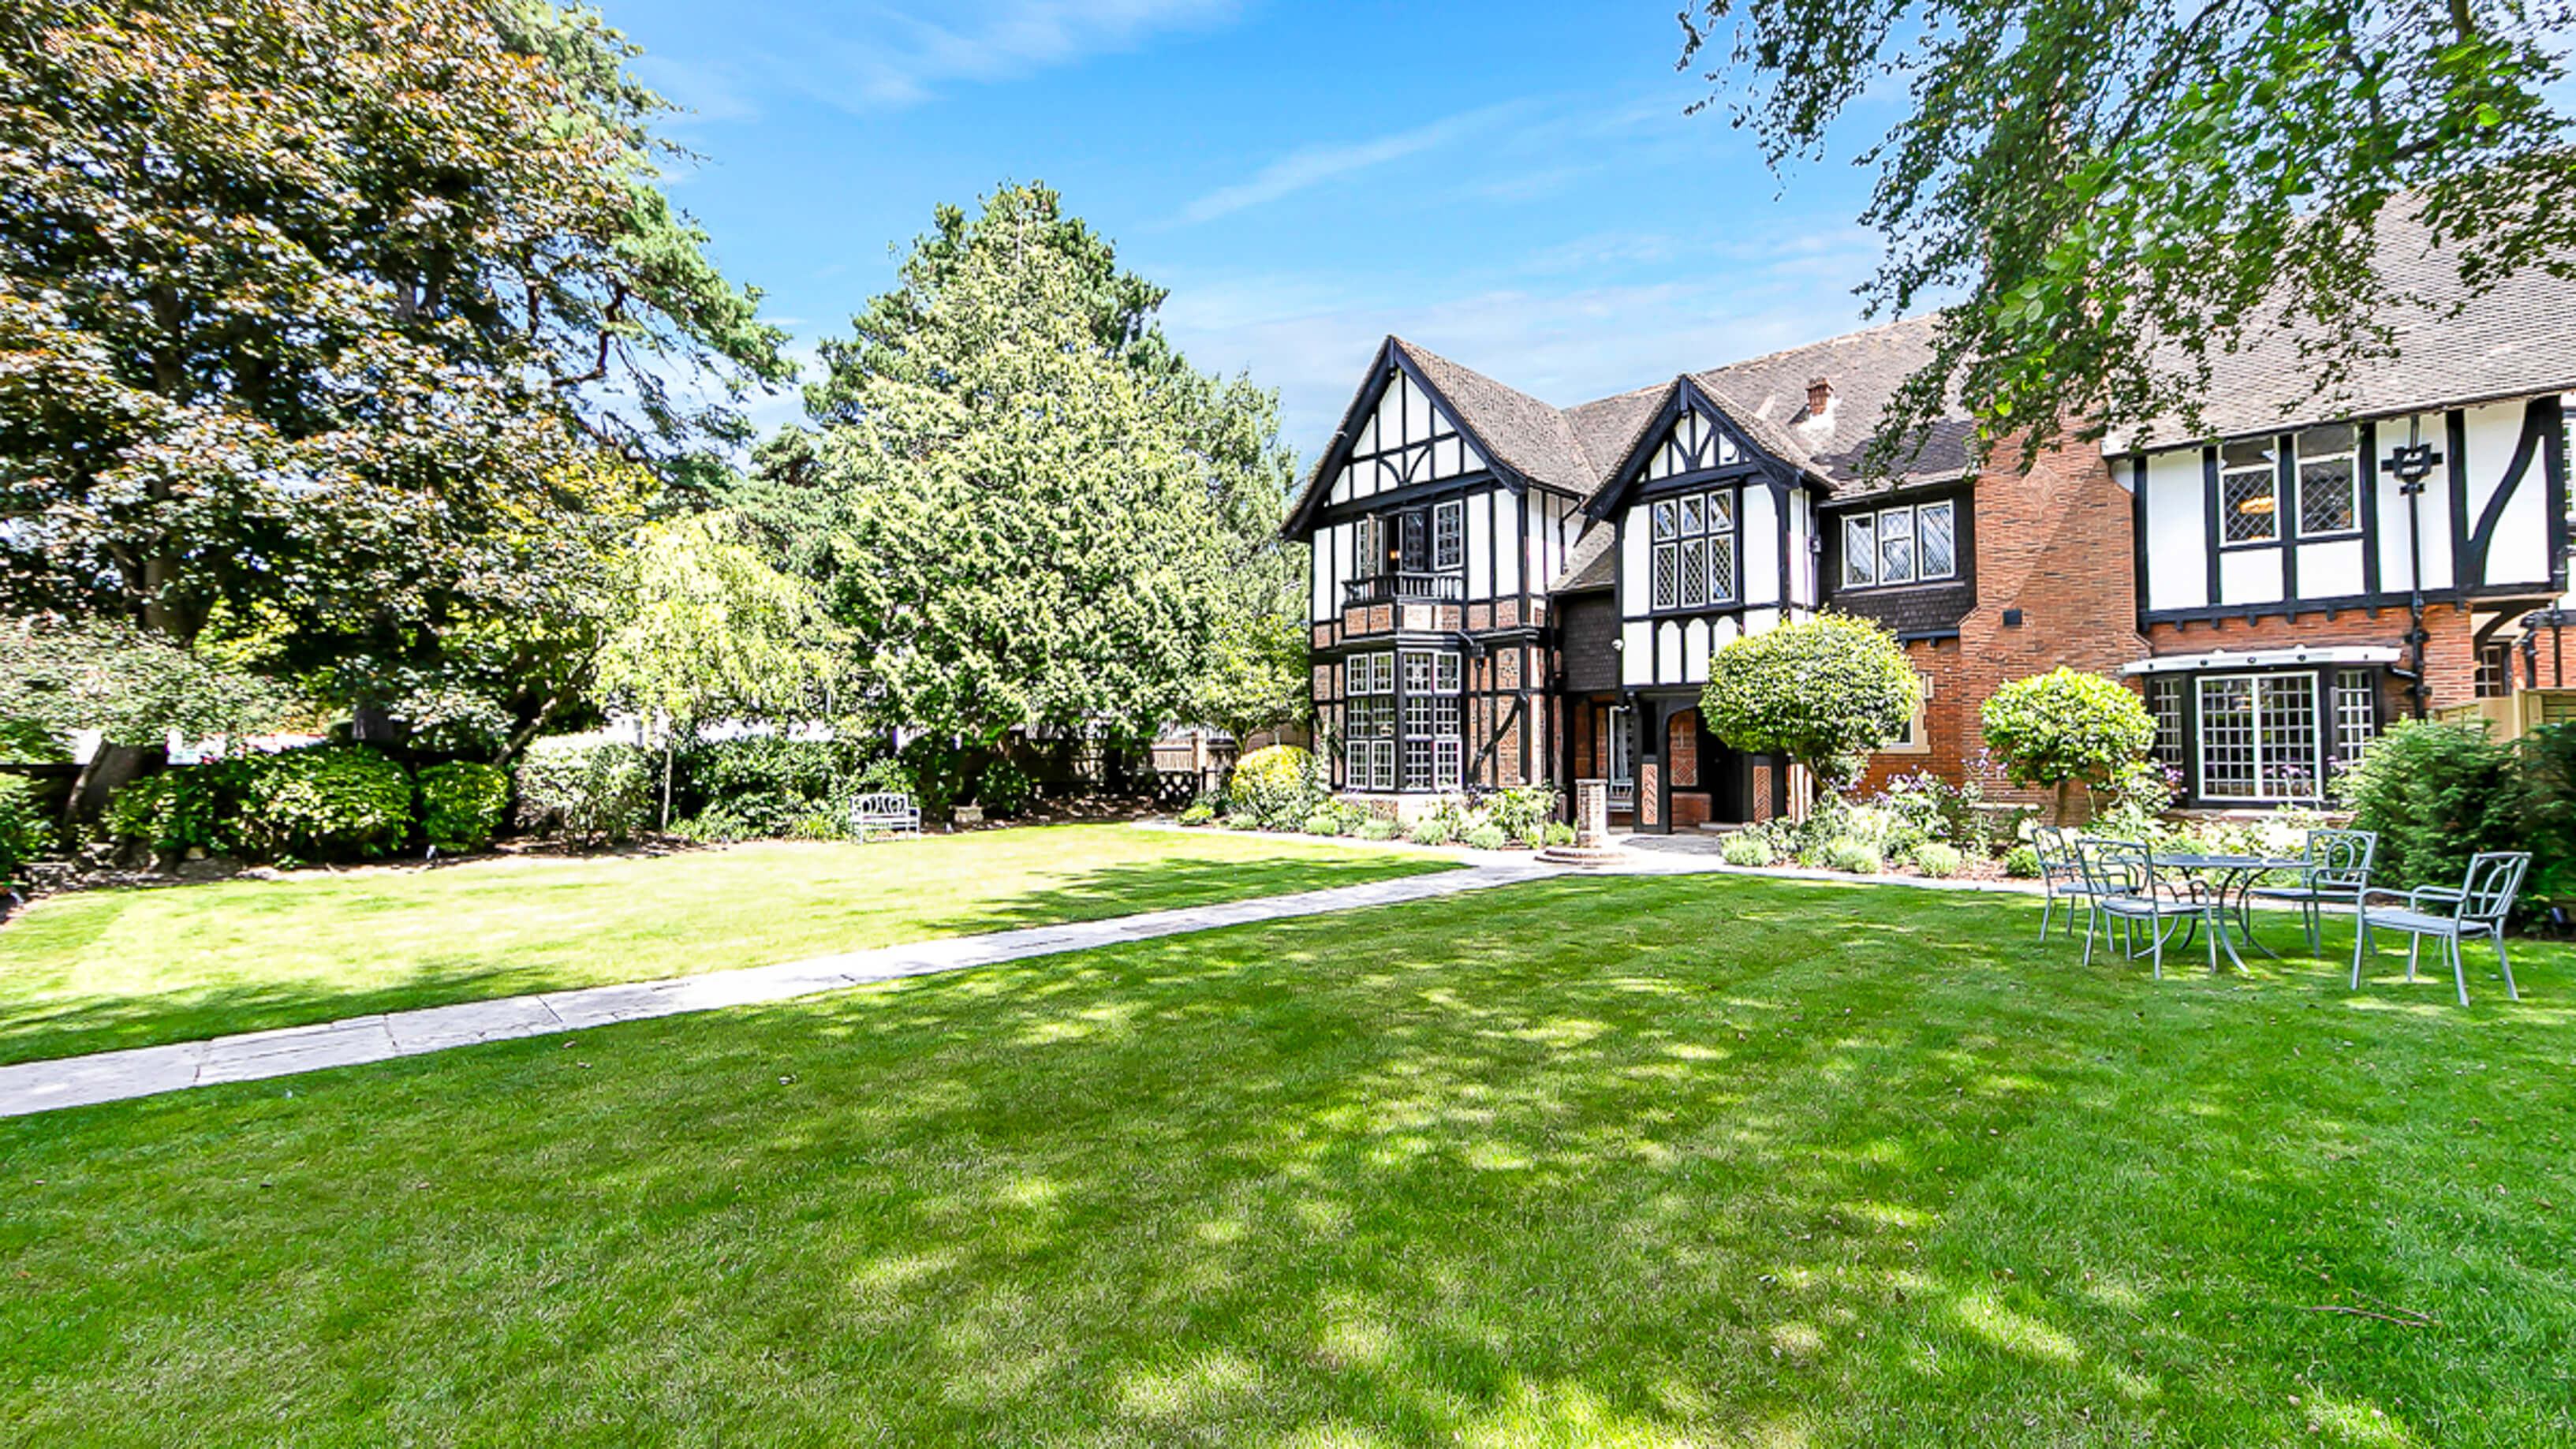 Tudor Grange – Tudor style house set in beautiful gardens